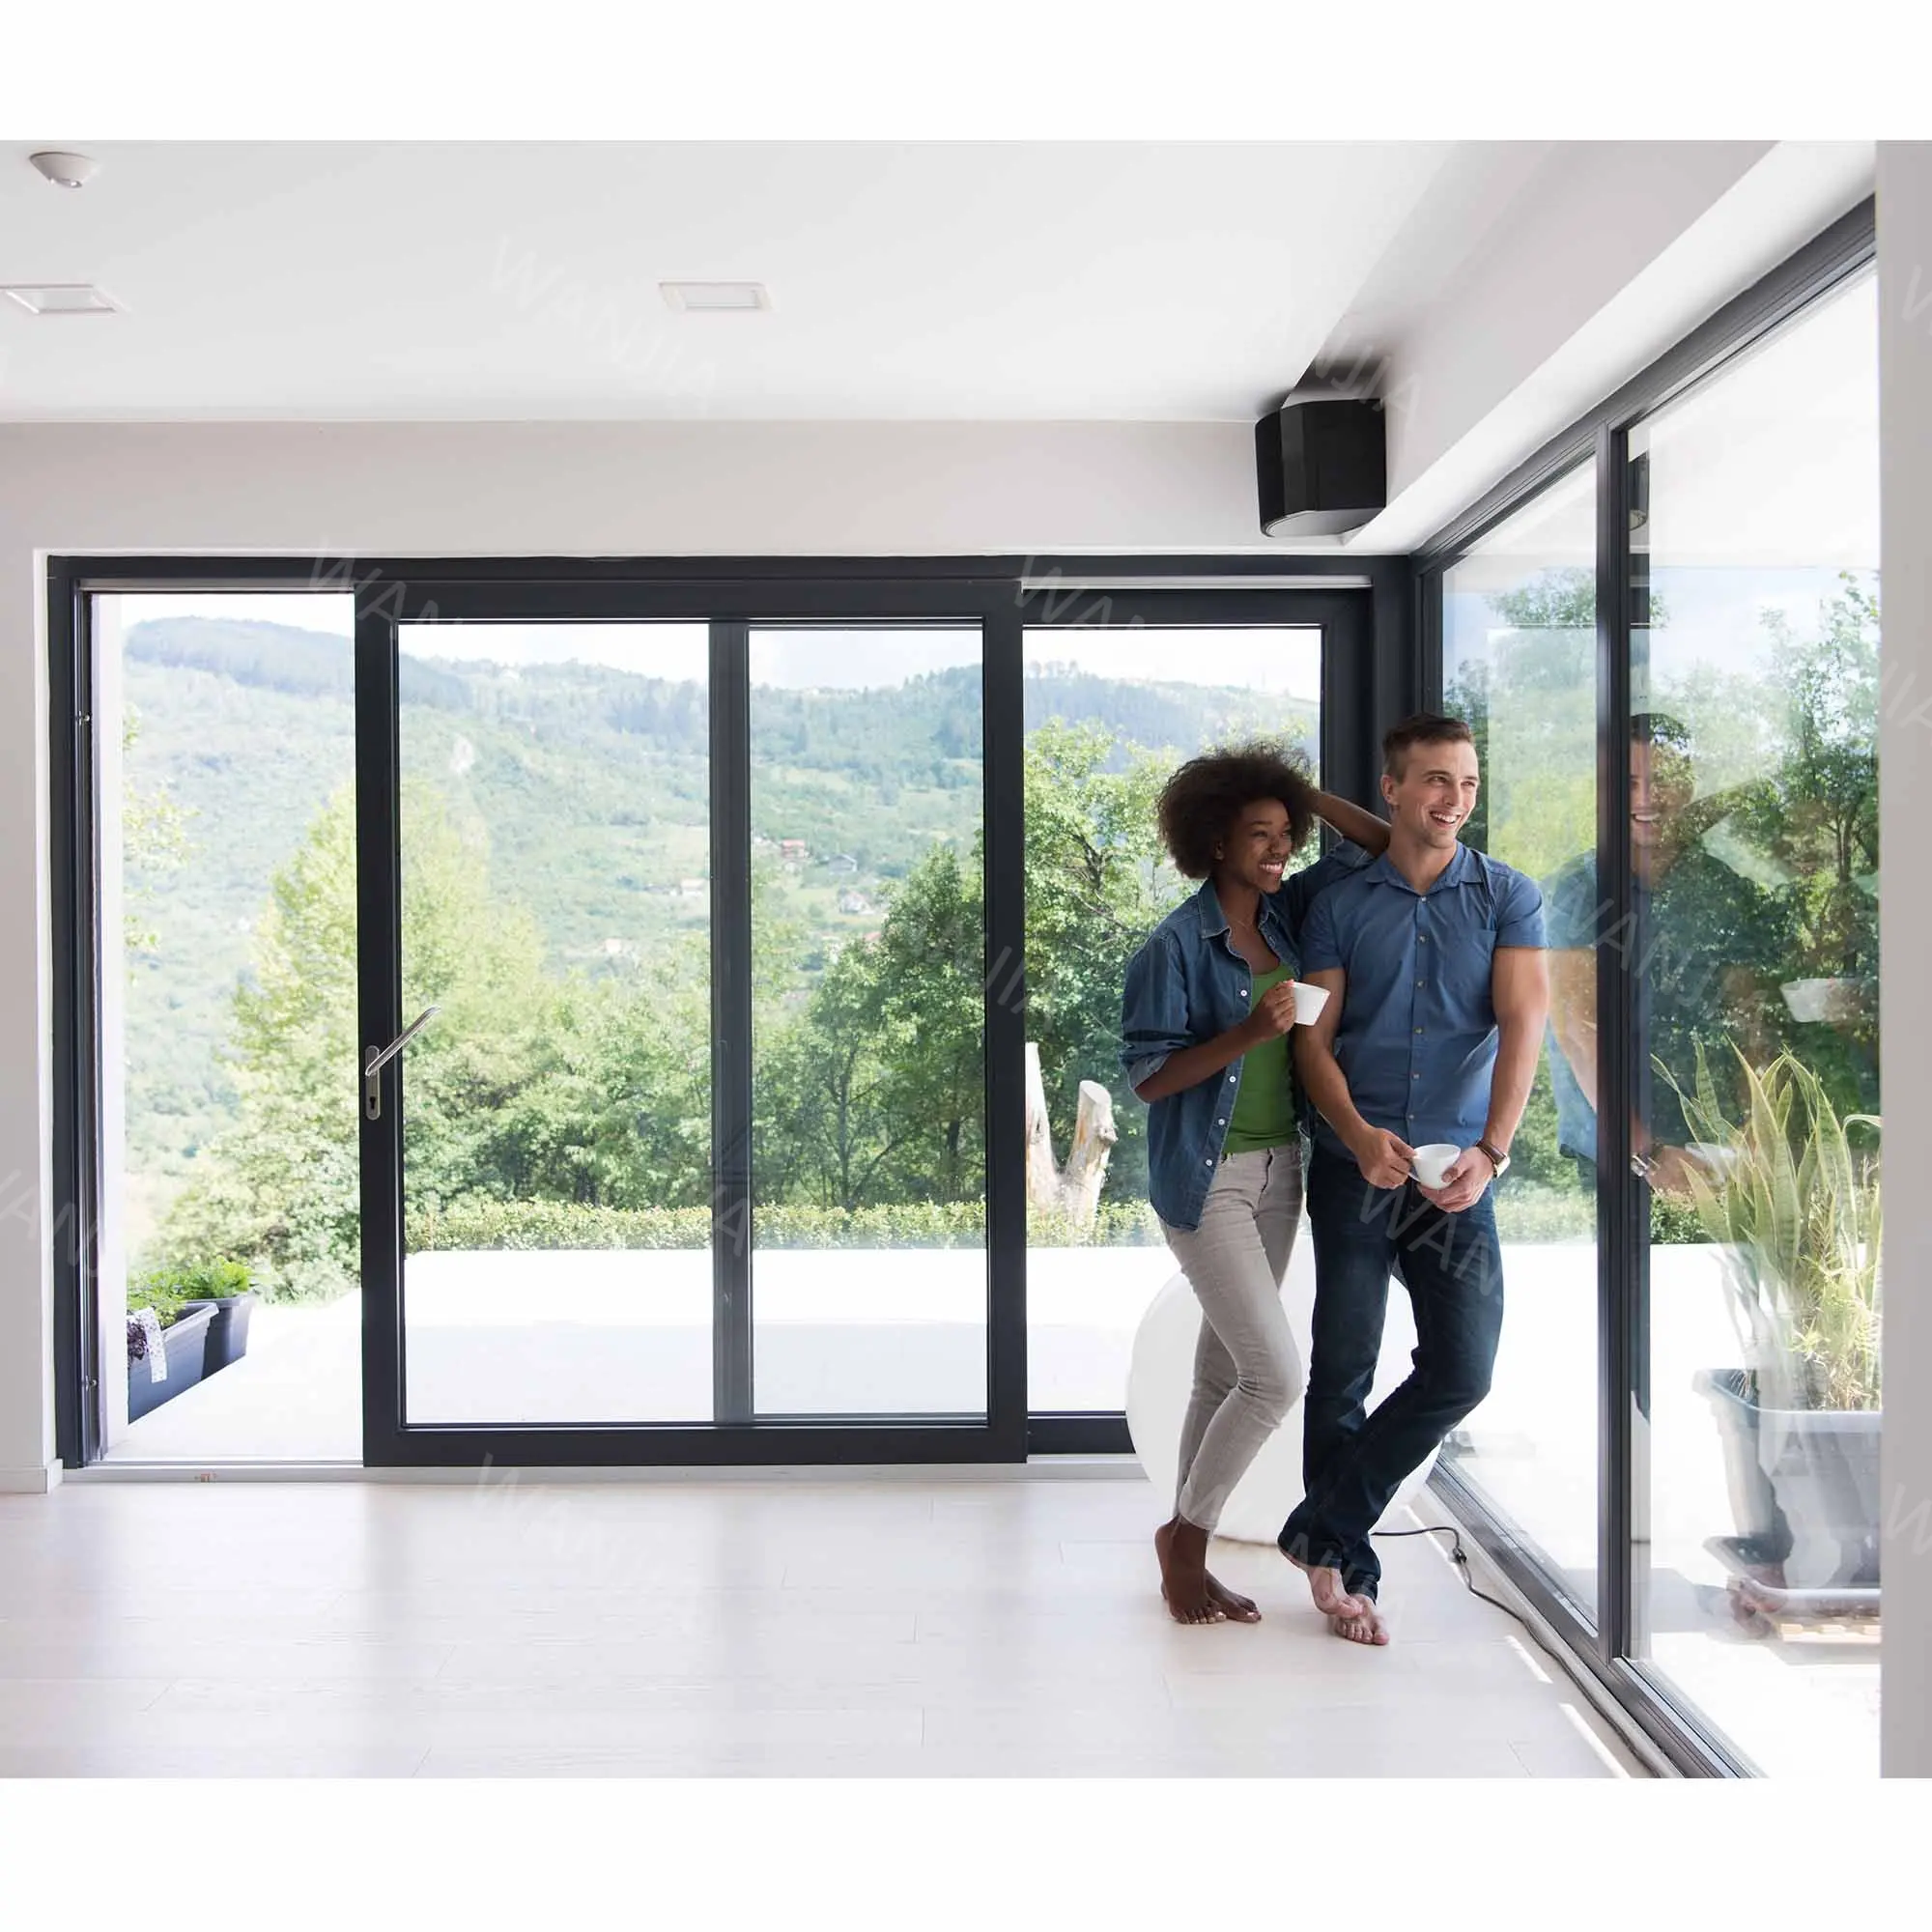 WANJIA aluminium double tempered glass sliding doors high quality energy efficient sliding door